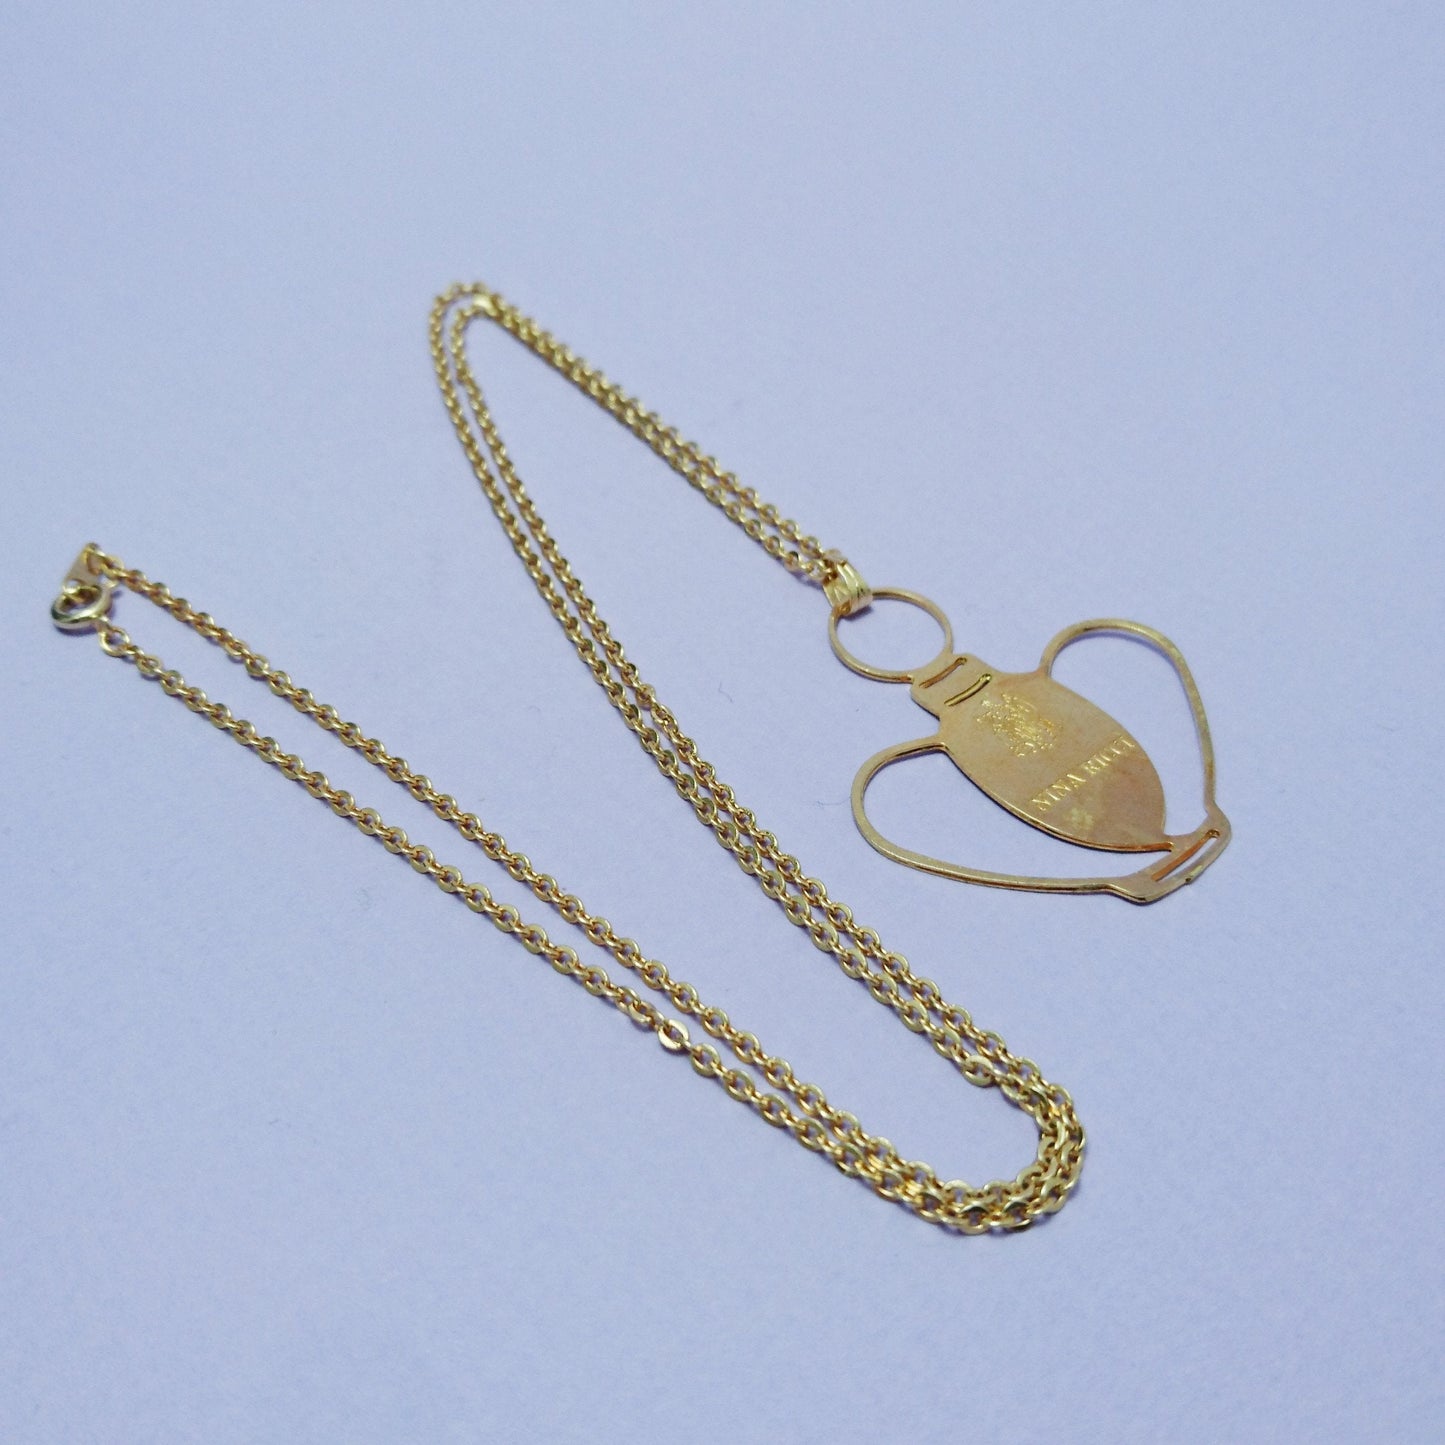 Vintage Nina Ricci long Chain Necklace - Secondista